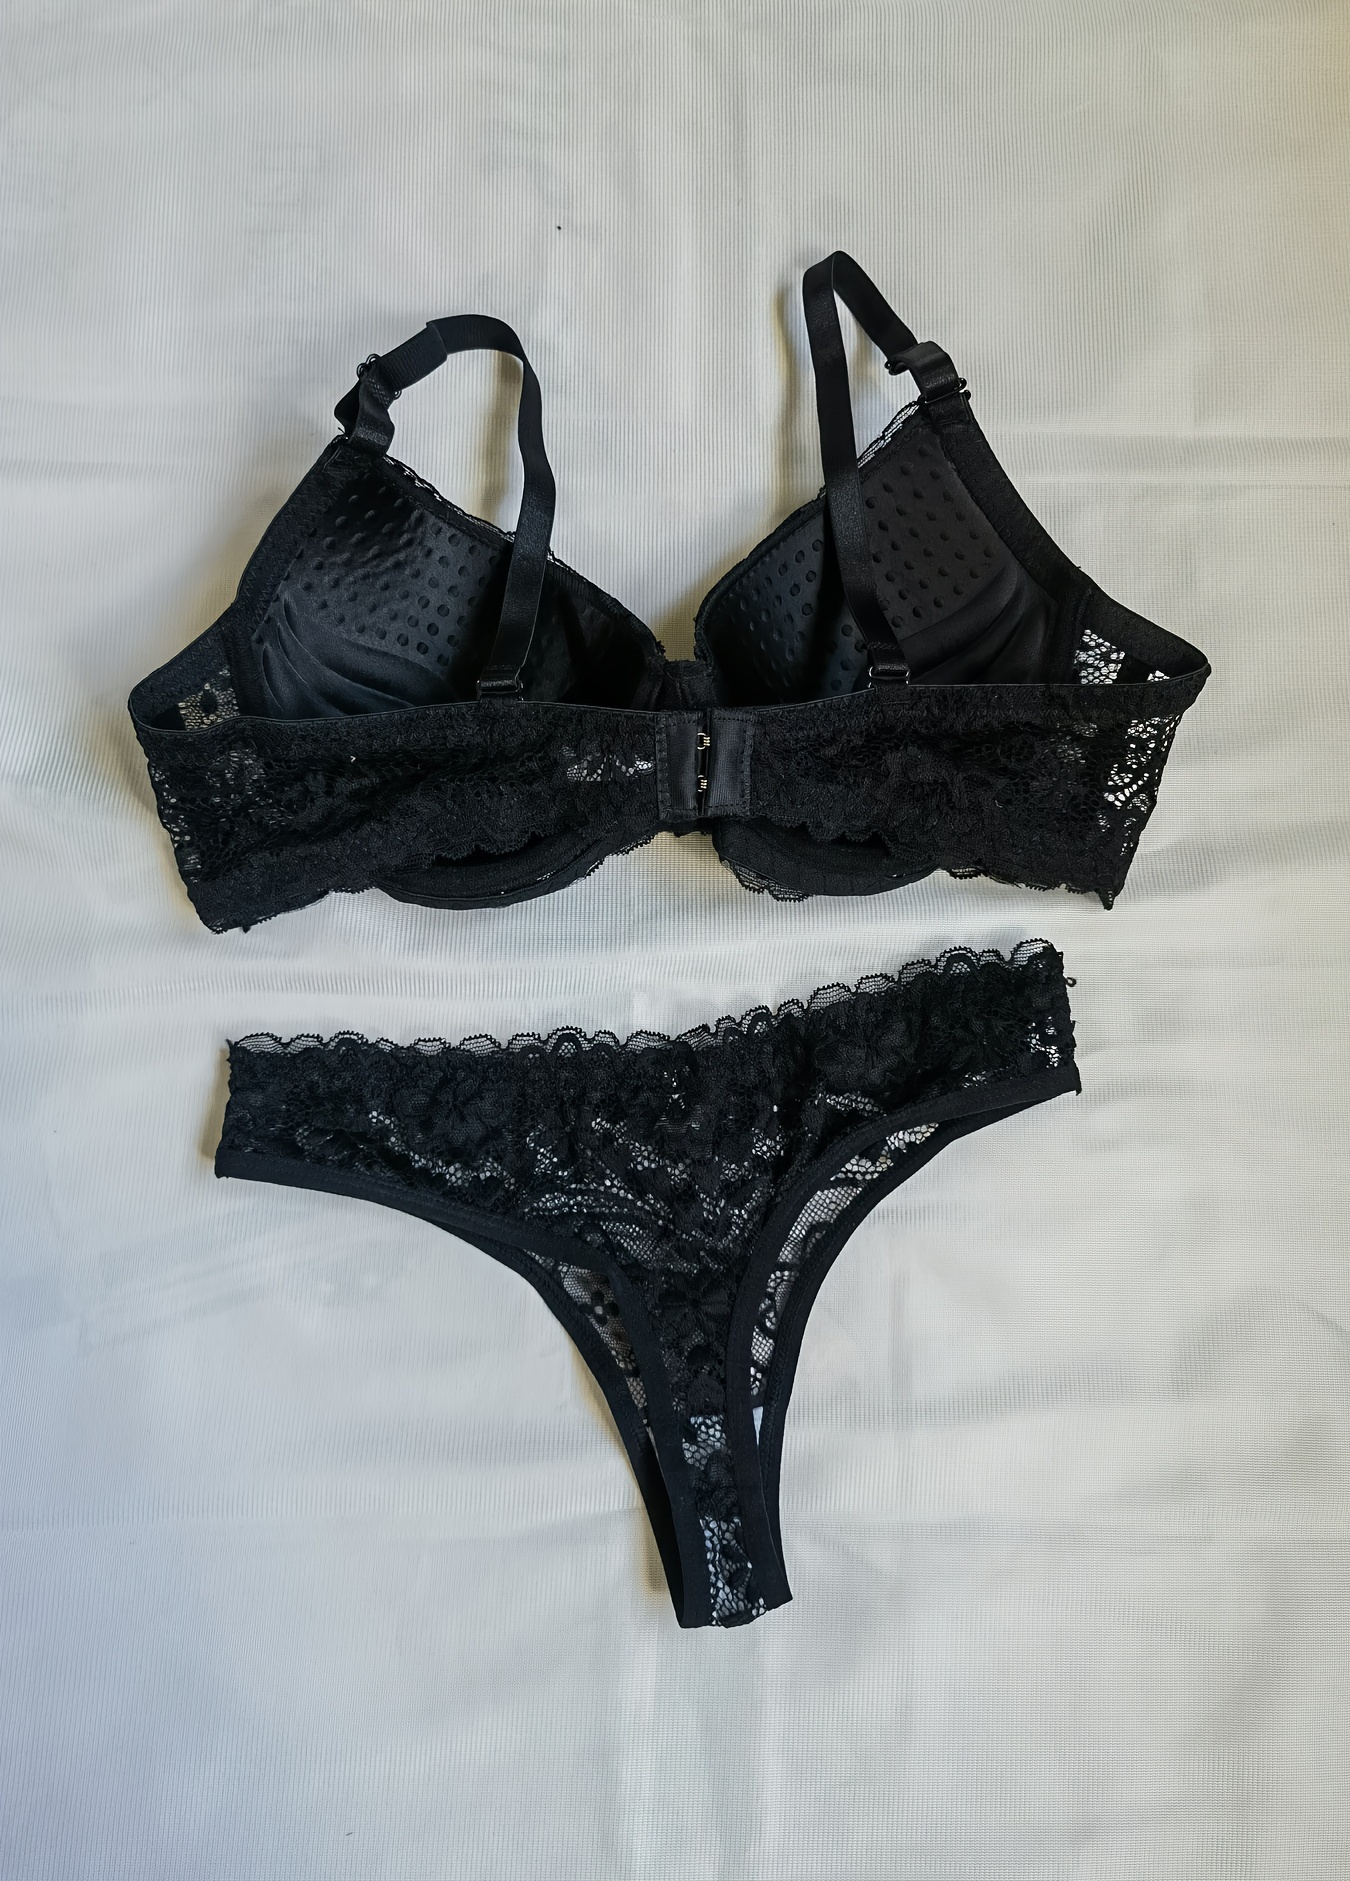 Victoria secret style lingerie /bra & panties set, Women's Fashion, New  Undergarments & Loungewear on Carousell